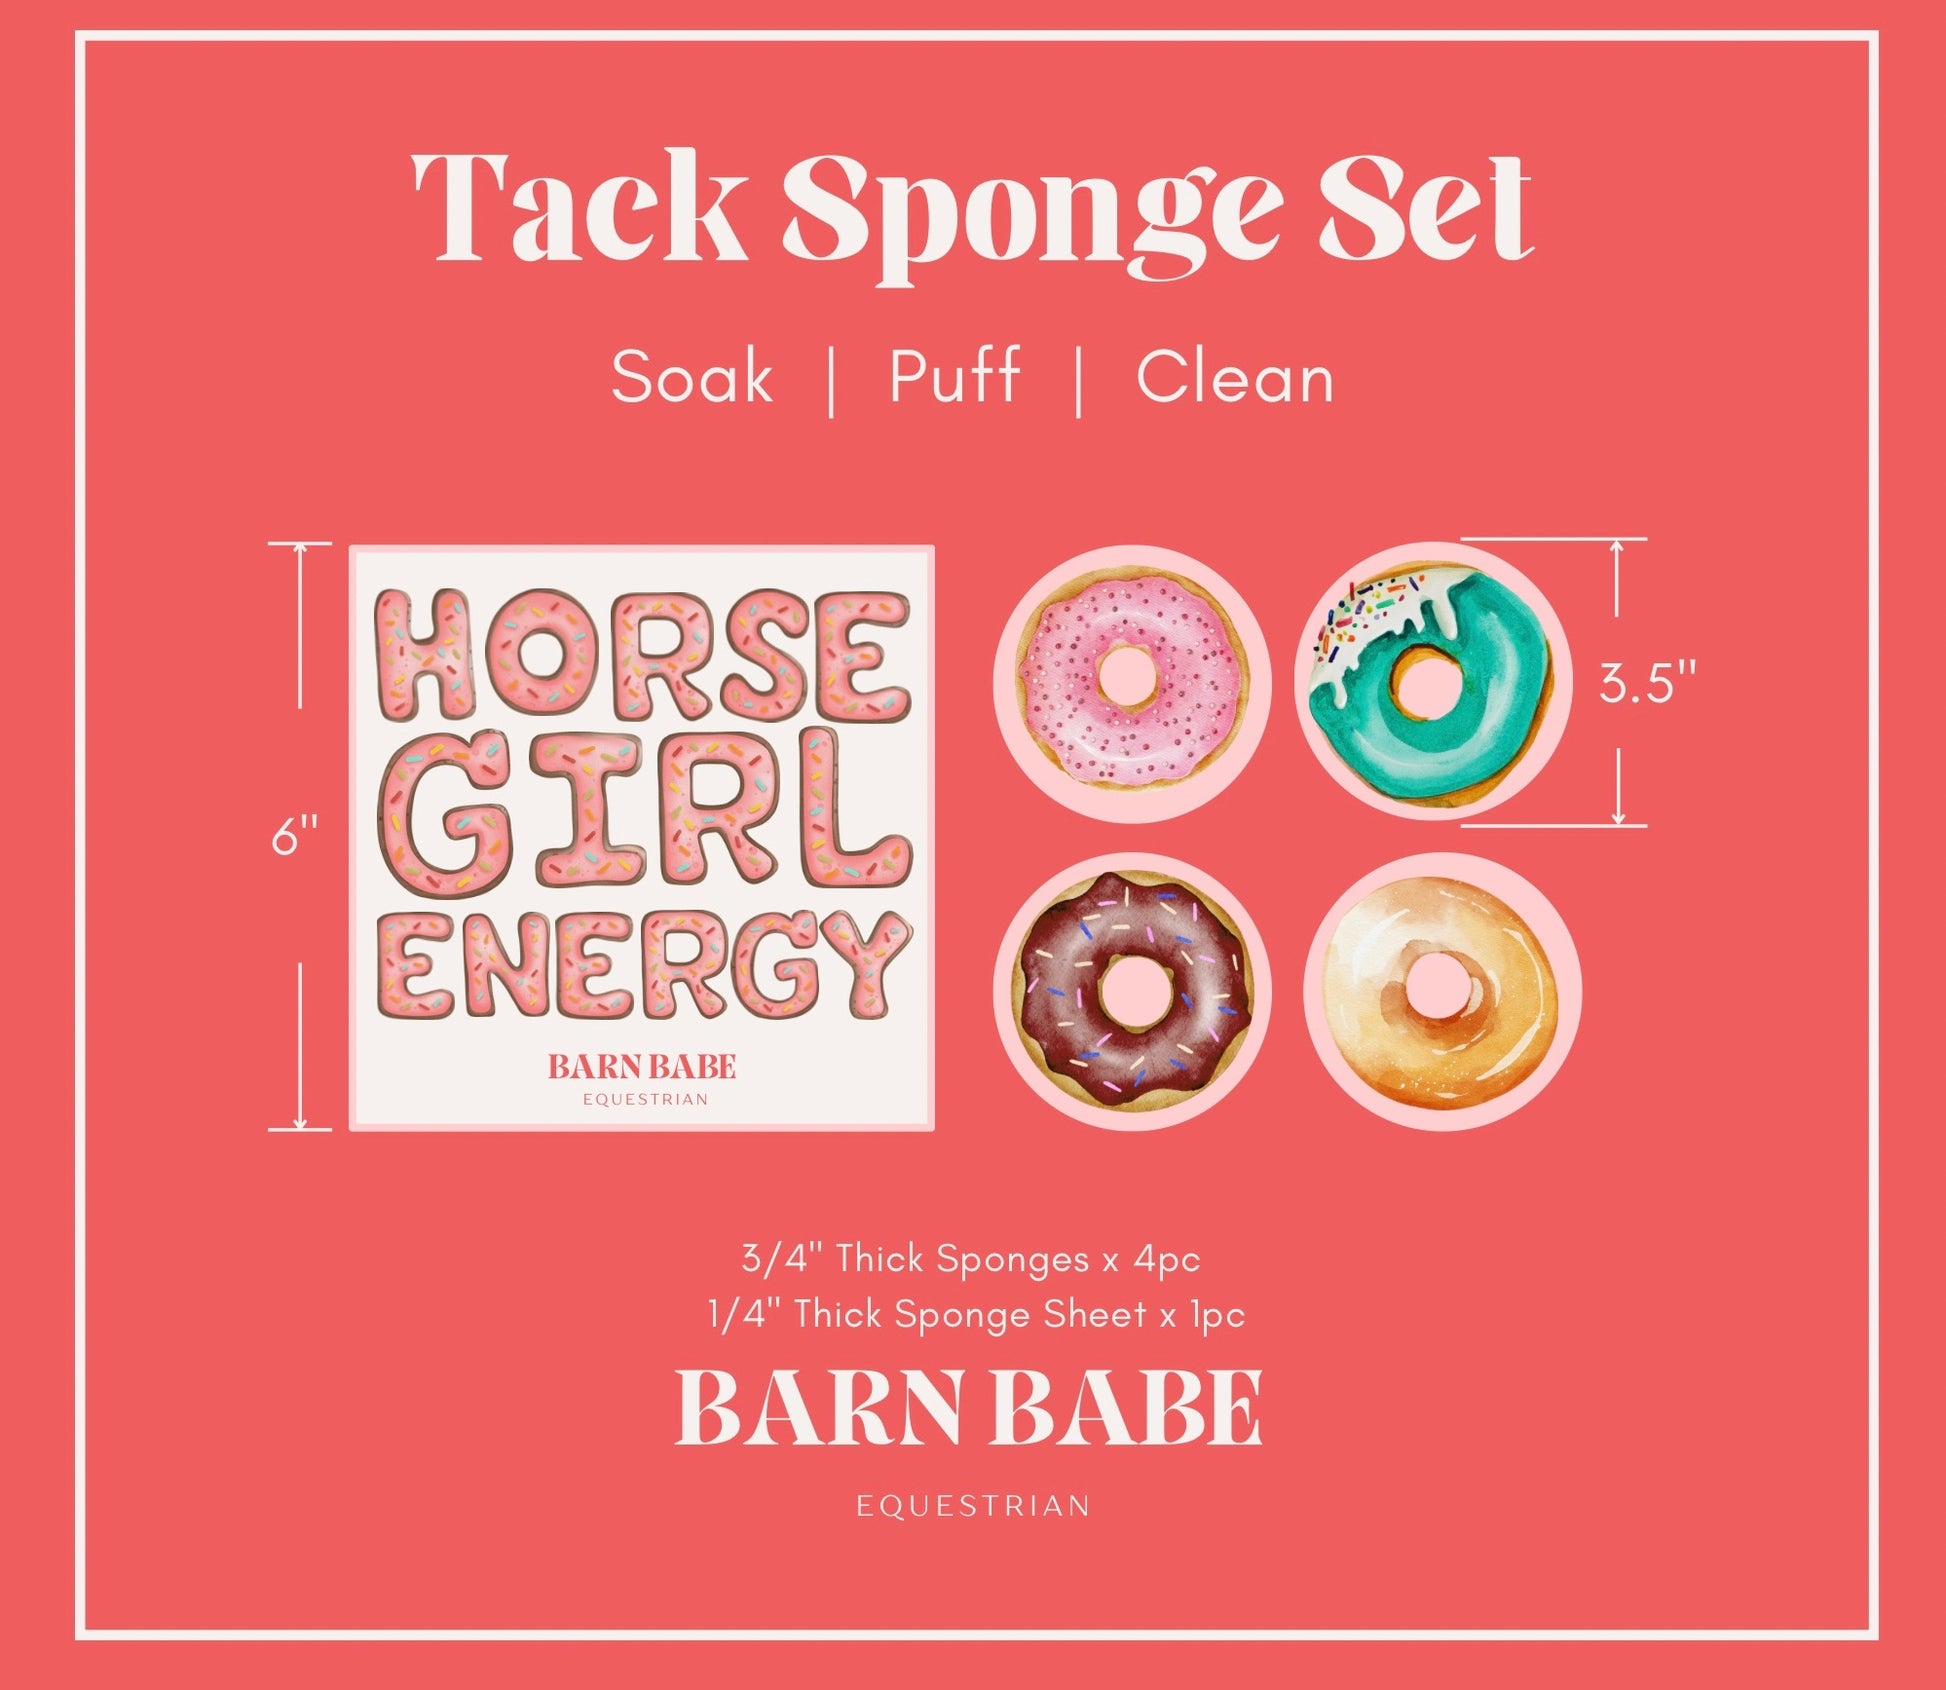 Horse & Tack Sponge